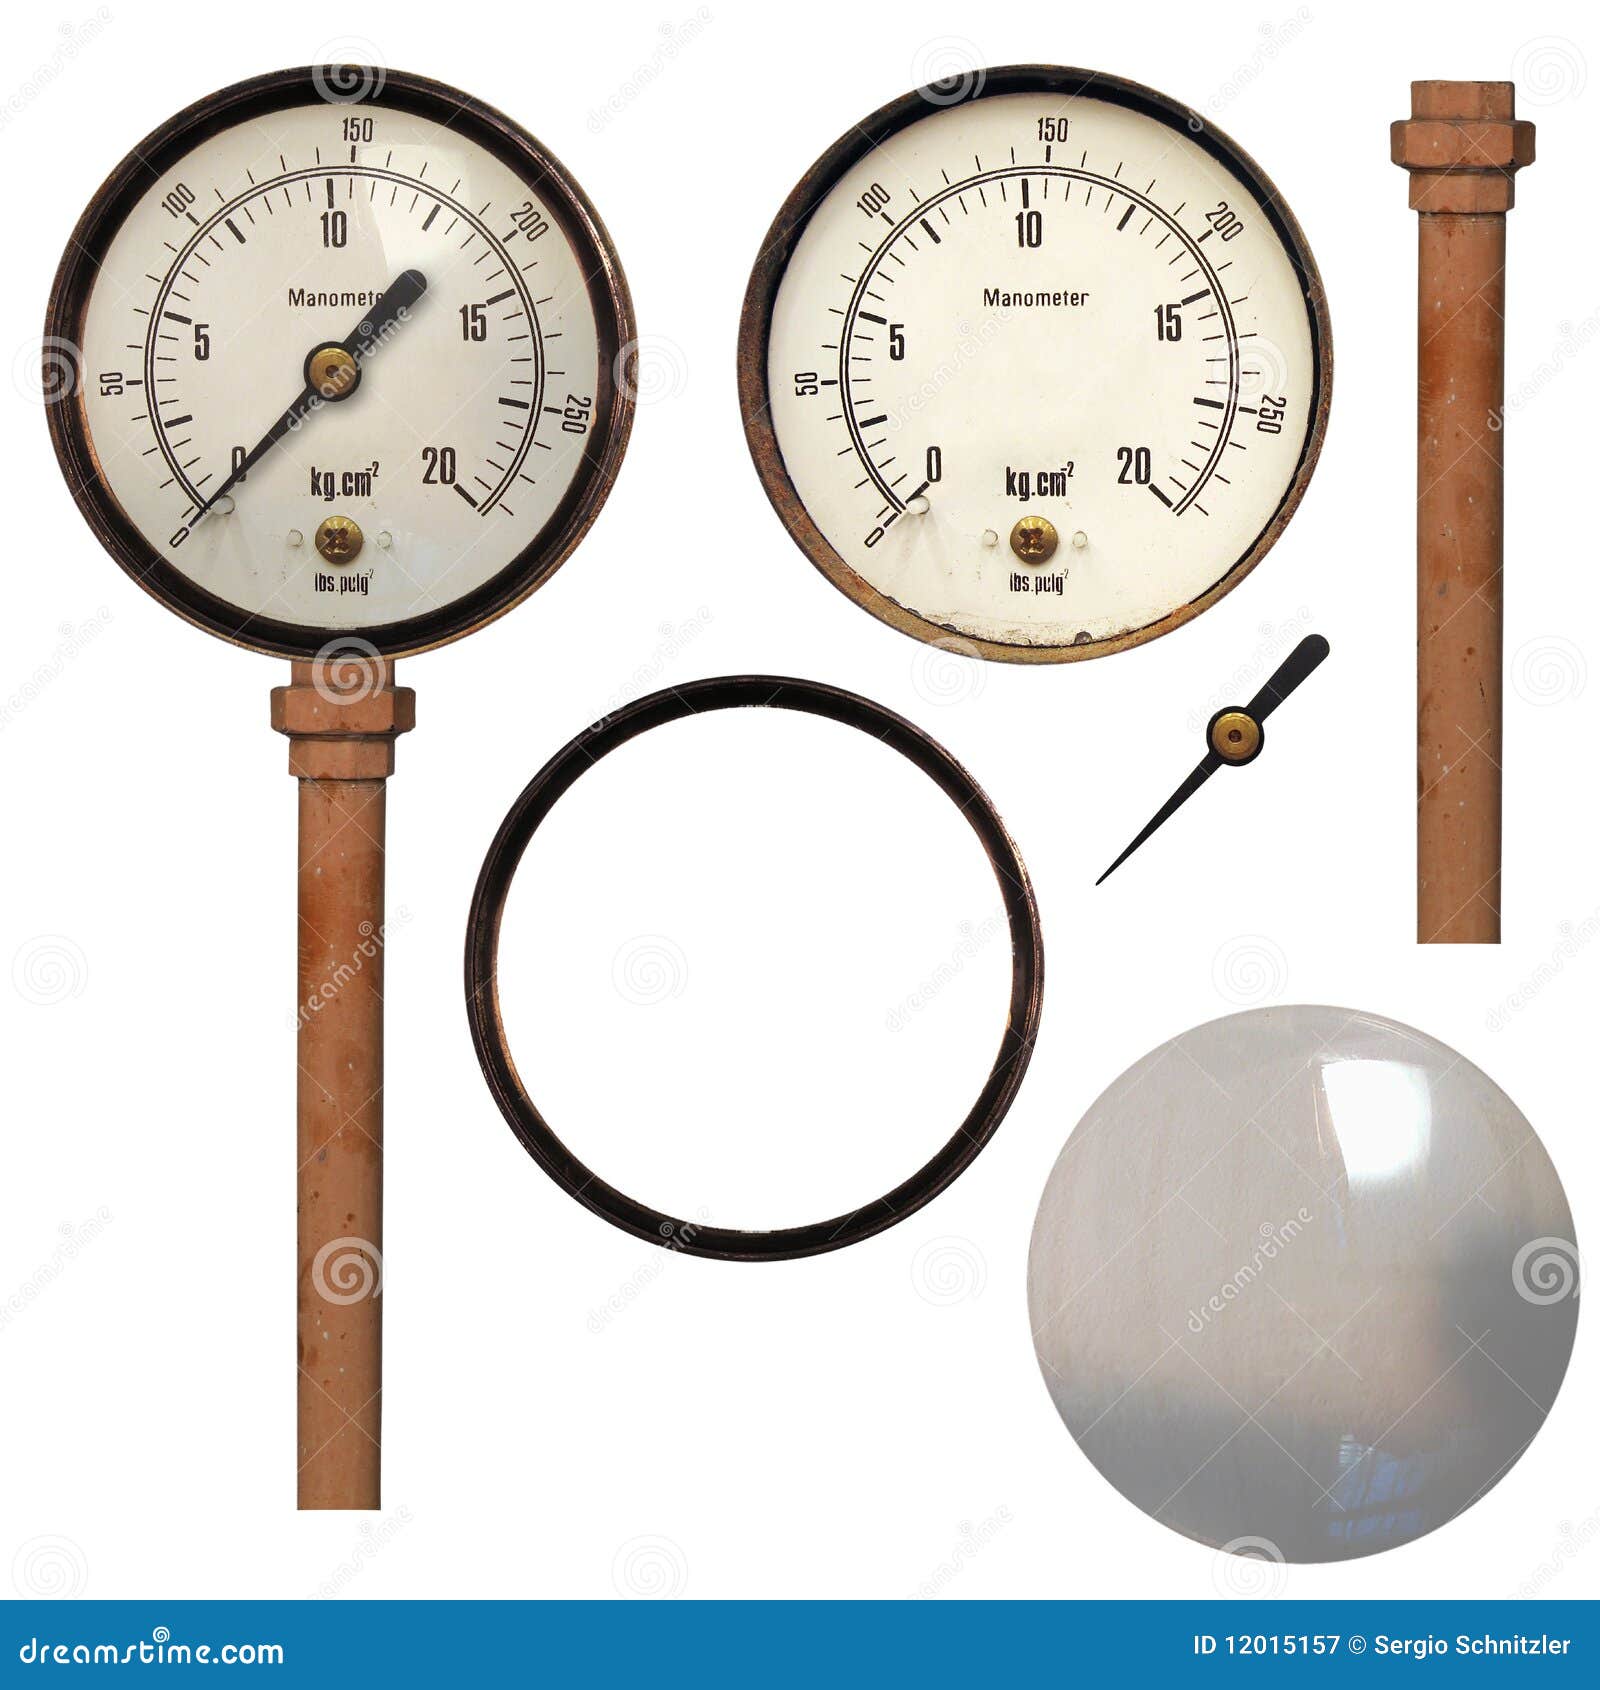 Measuring steam pressure фото 102